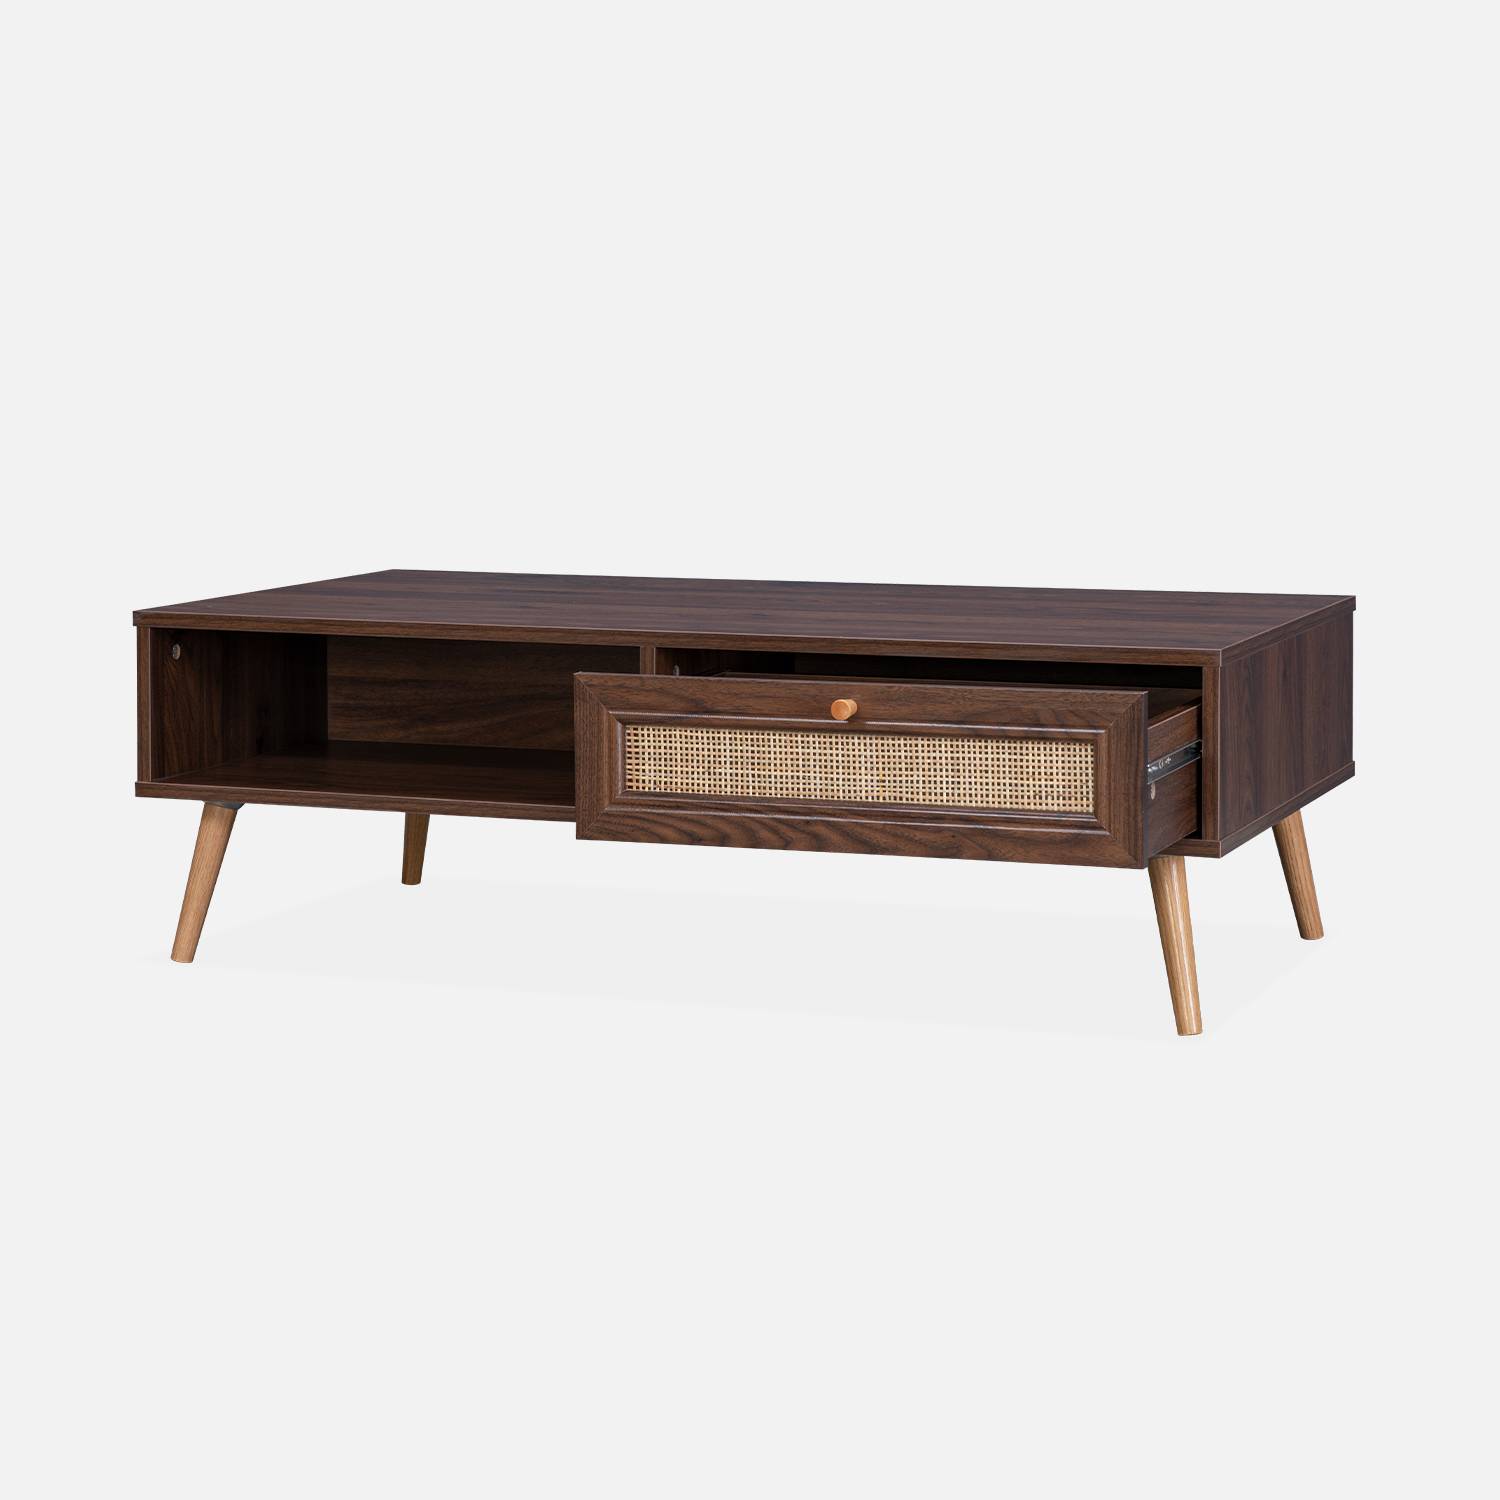  Wood and woven rattan coffee table with storage, 110x59x39cm, dark wood, Boheme,sweeek,Photo4